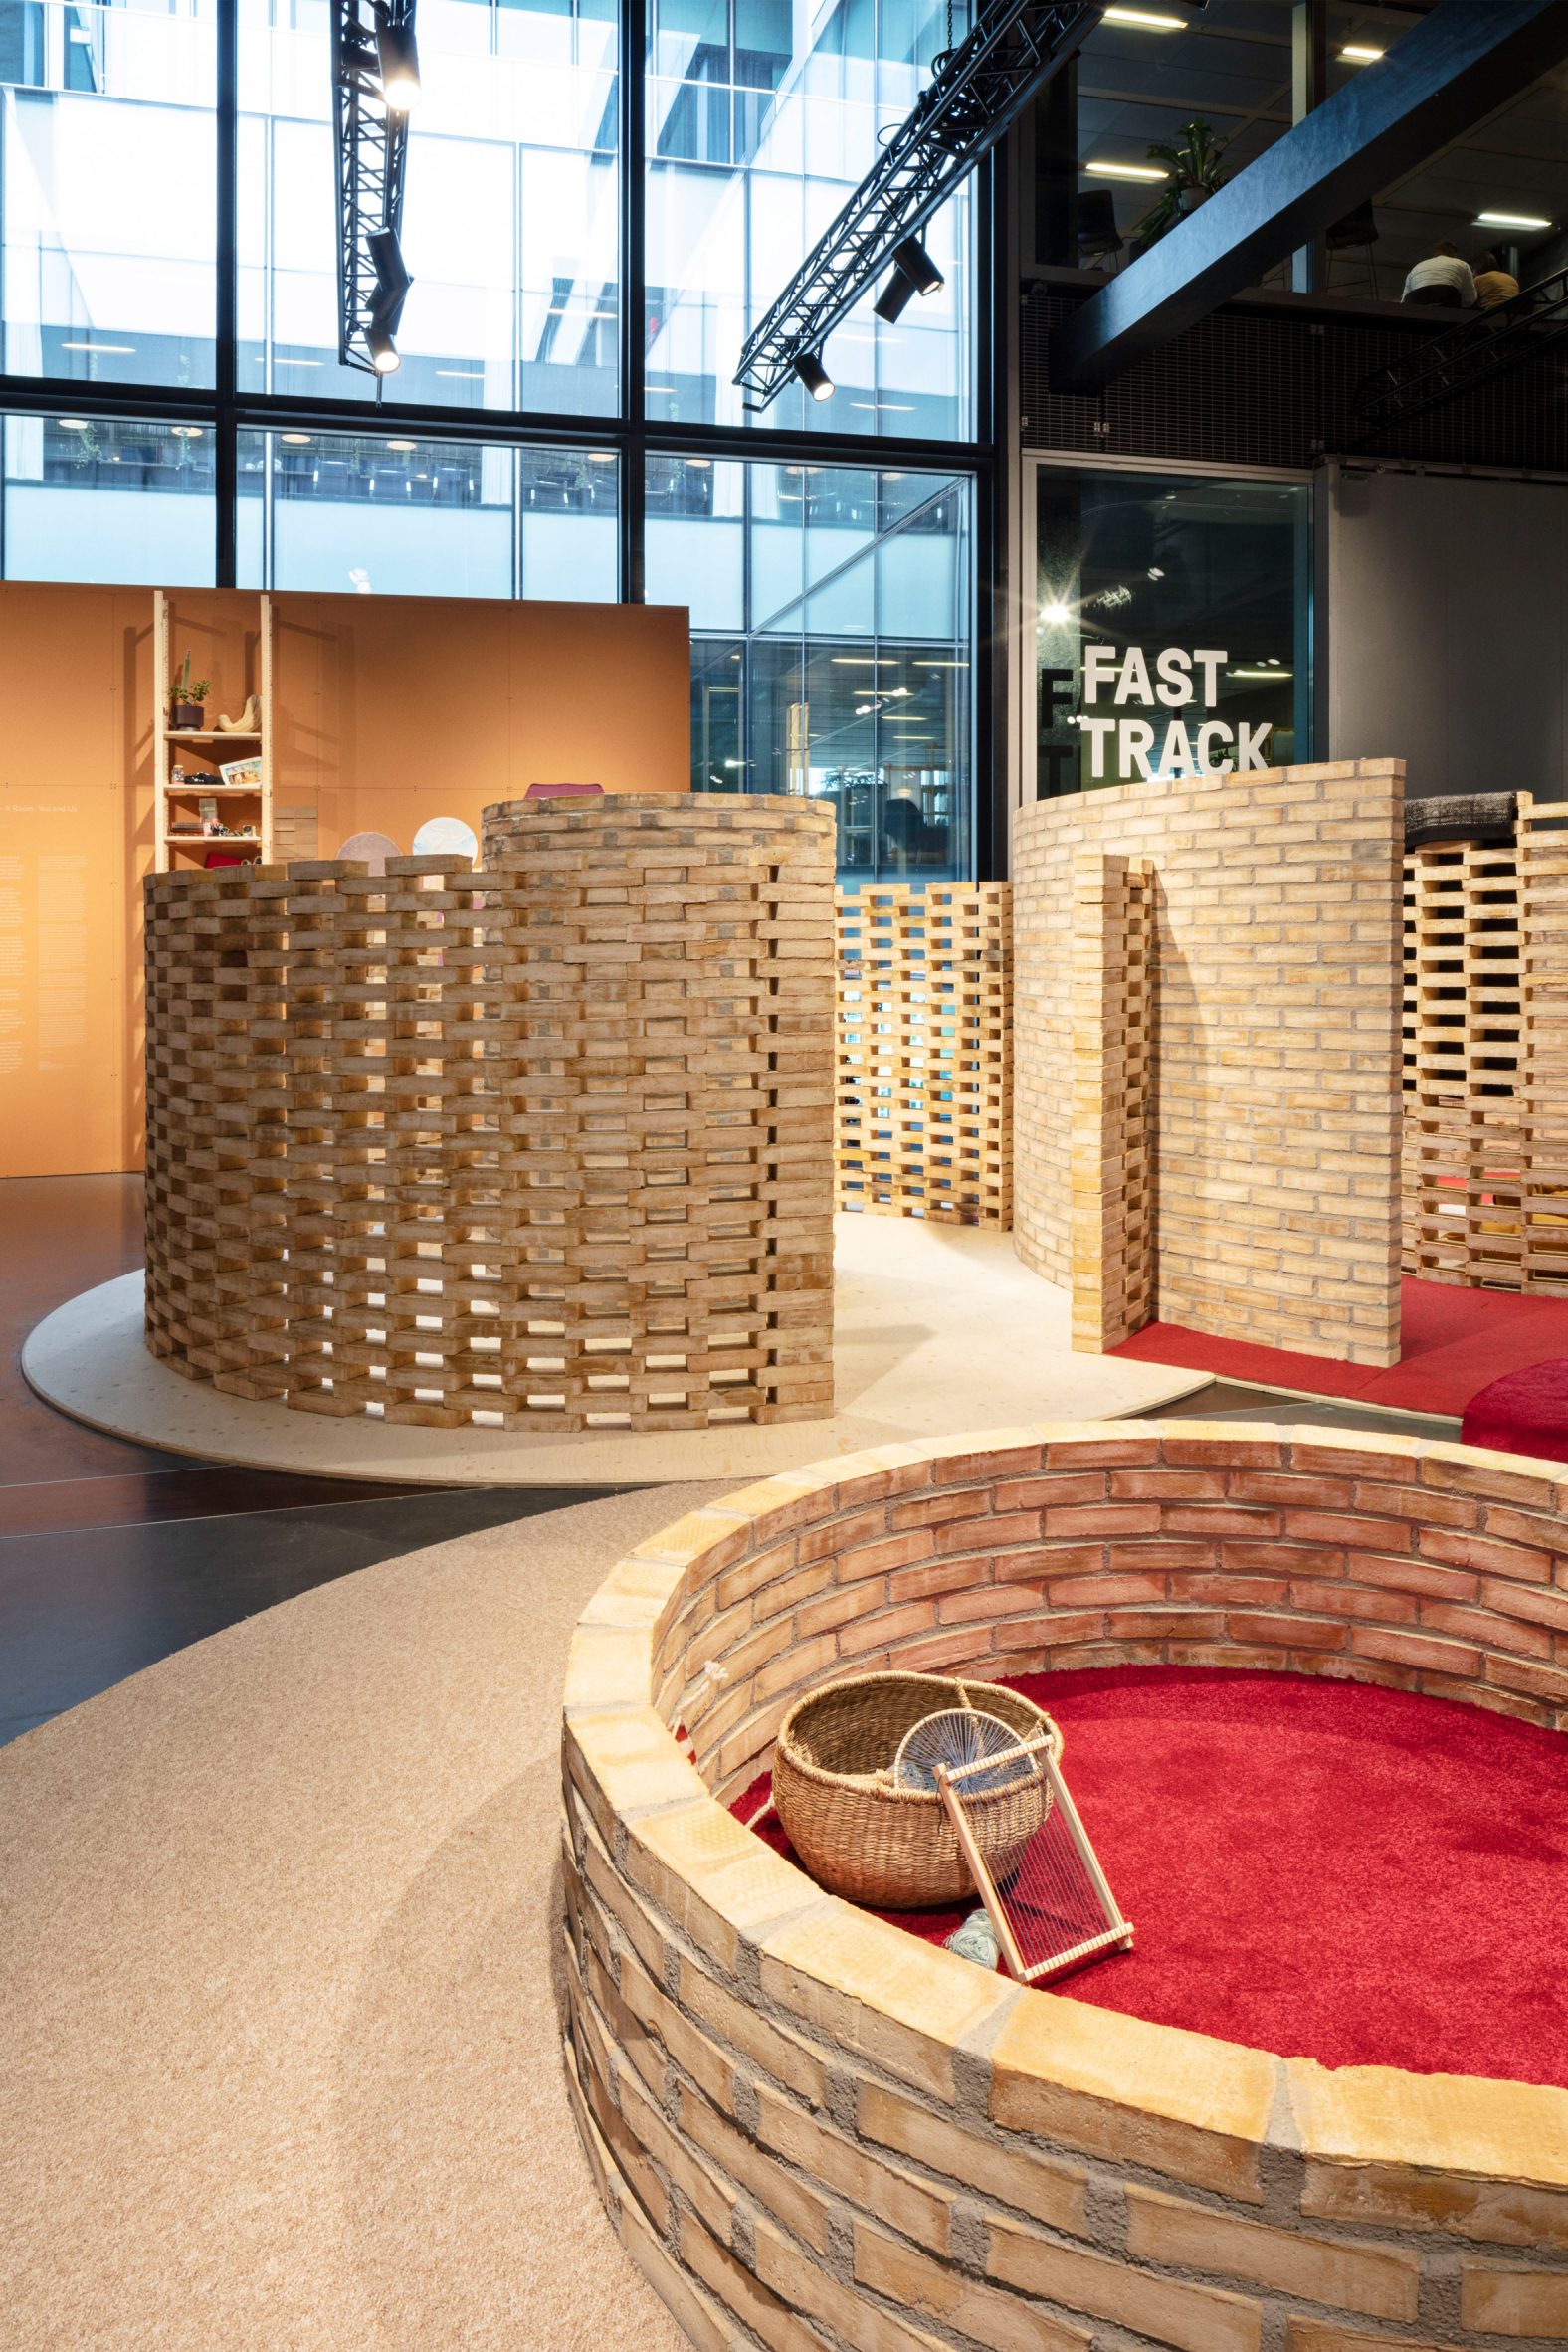 Circular brick pavilions by Tatiana Bilbao